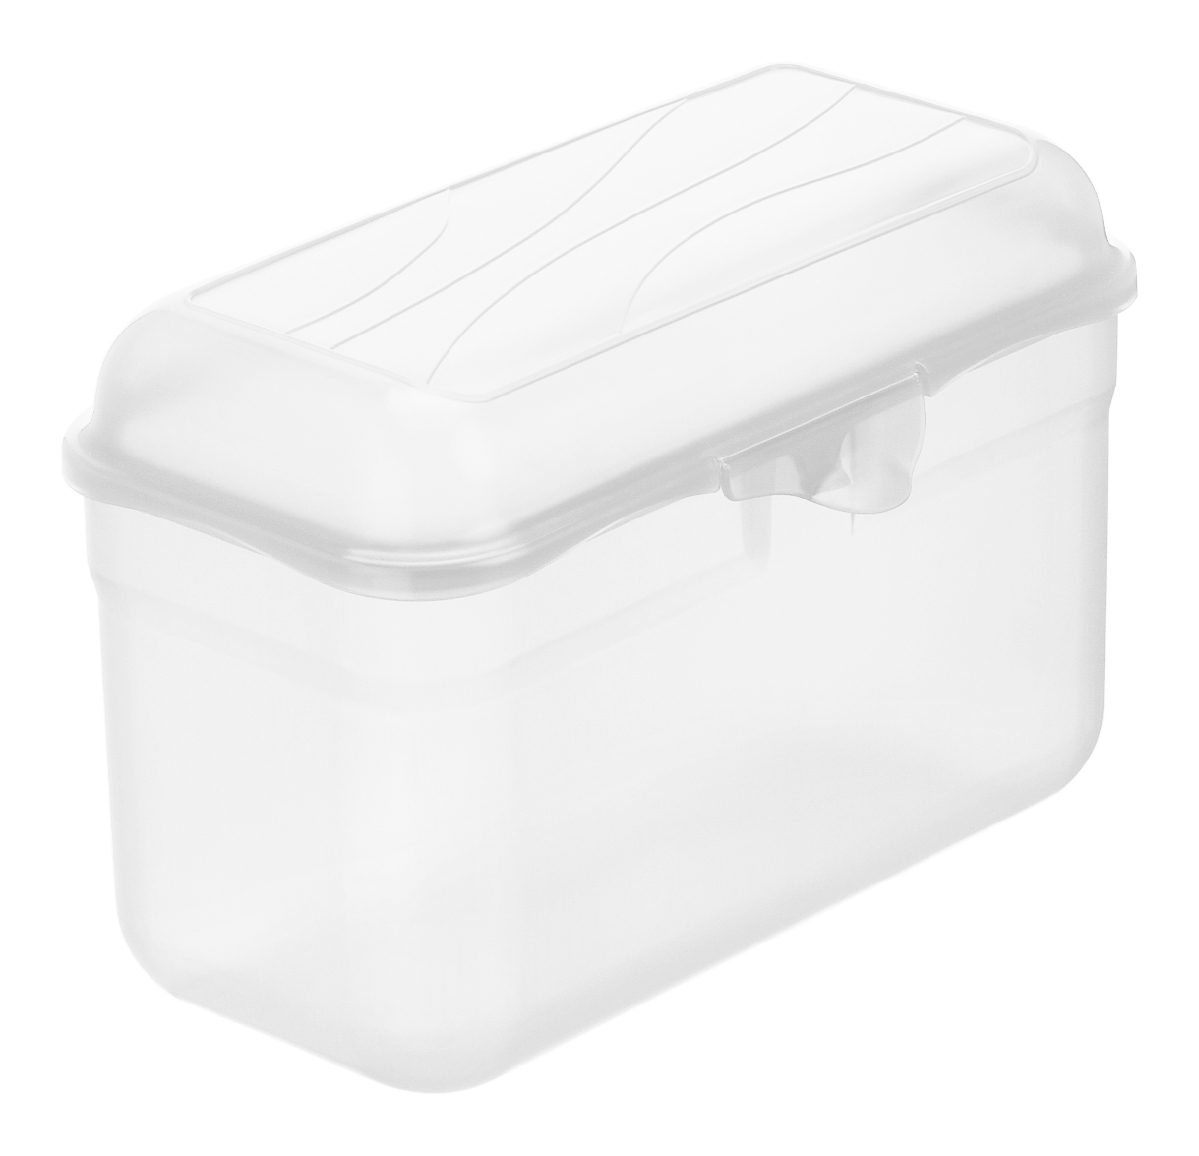 Lunchbox 1,75 litre FUN